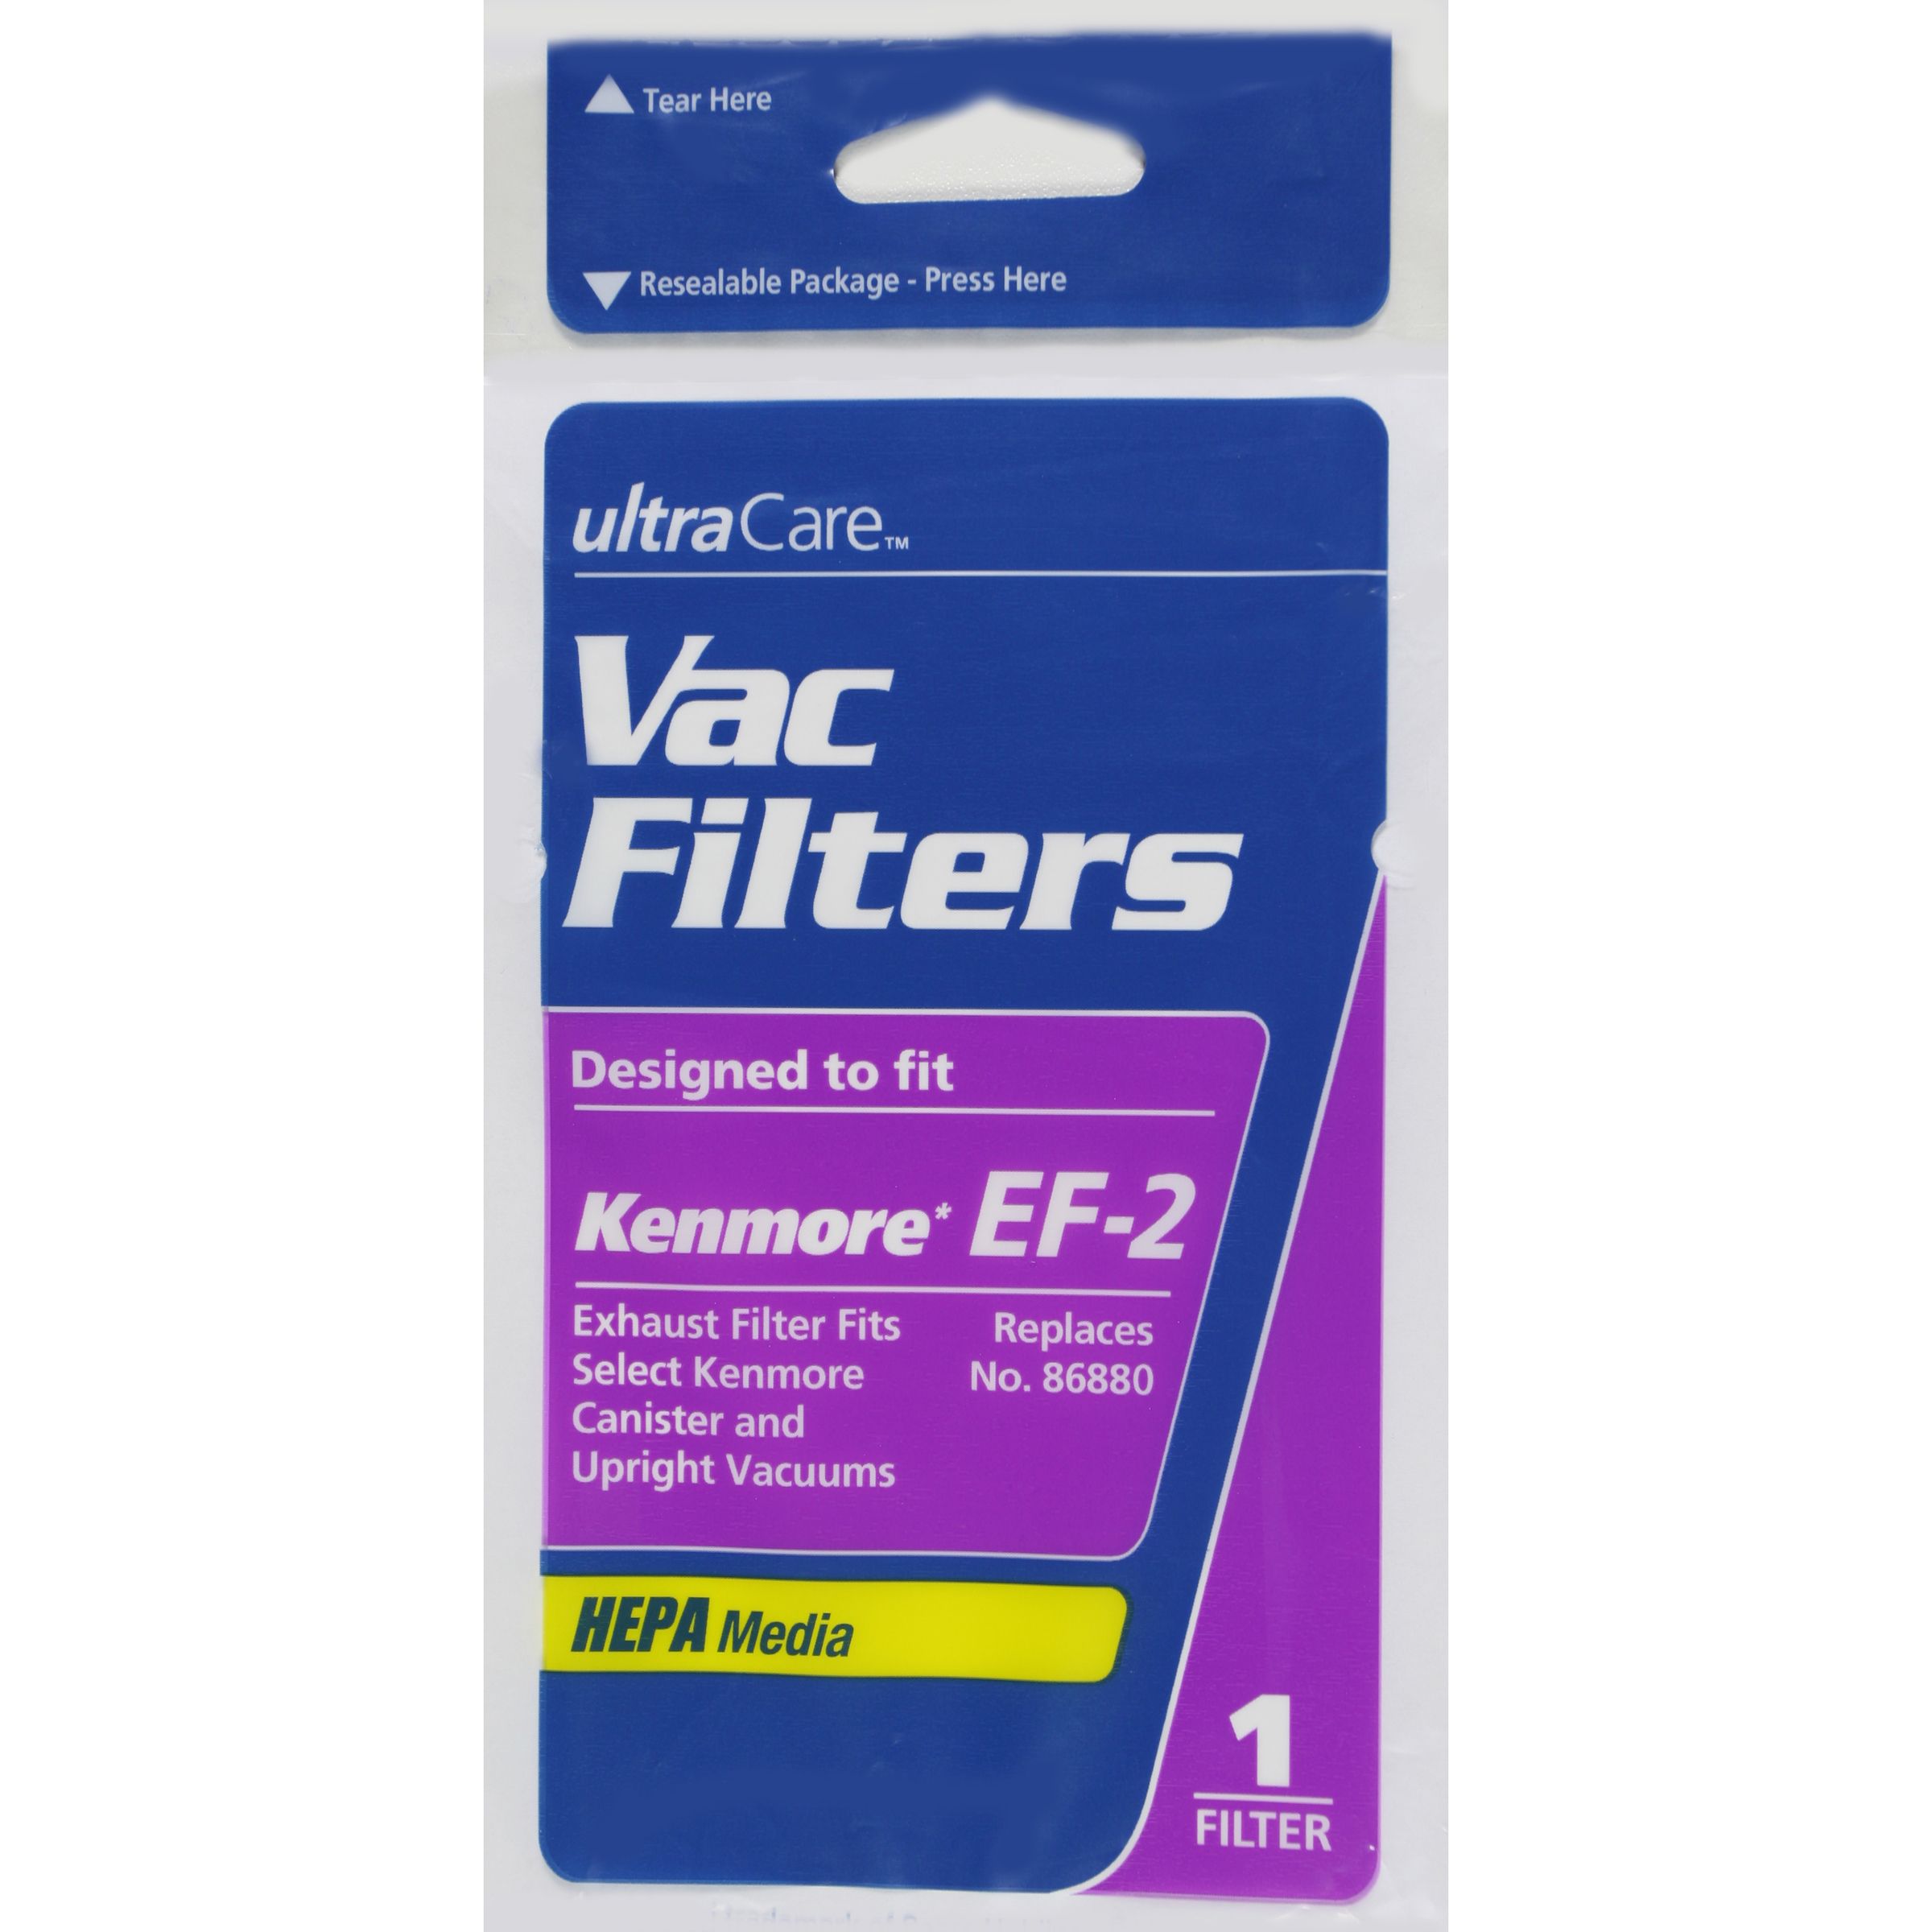 UltraCare 610445 Kenmore EF-2 Exhaust Cartridge Vacuum Filter